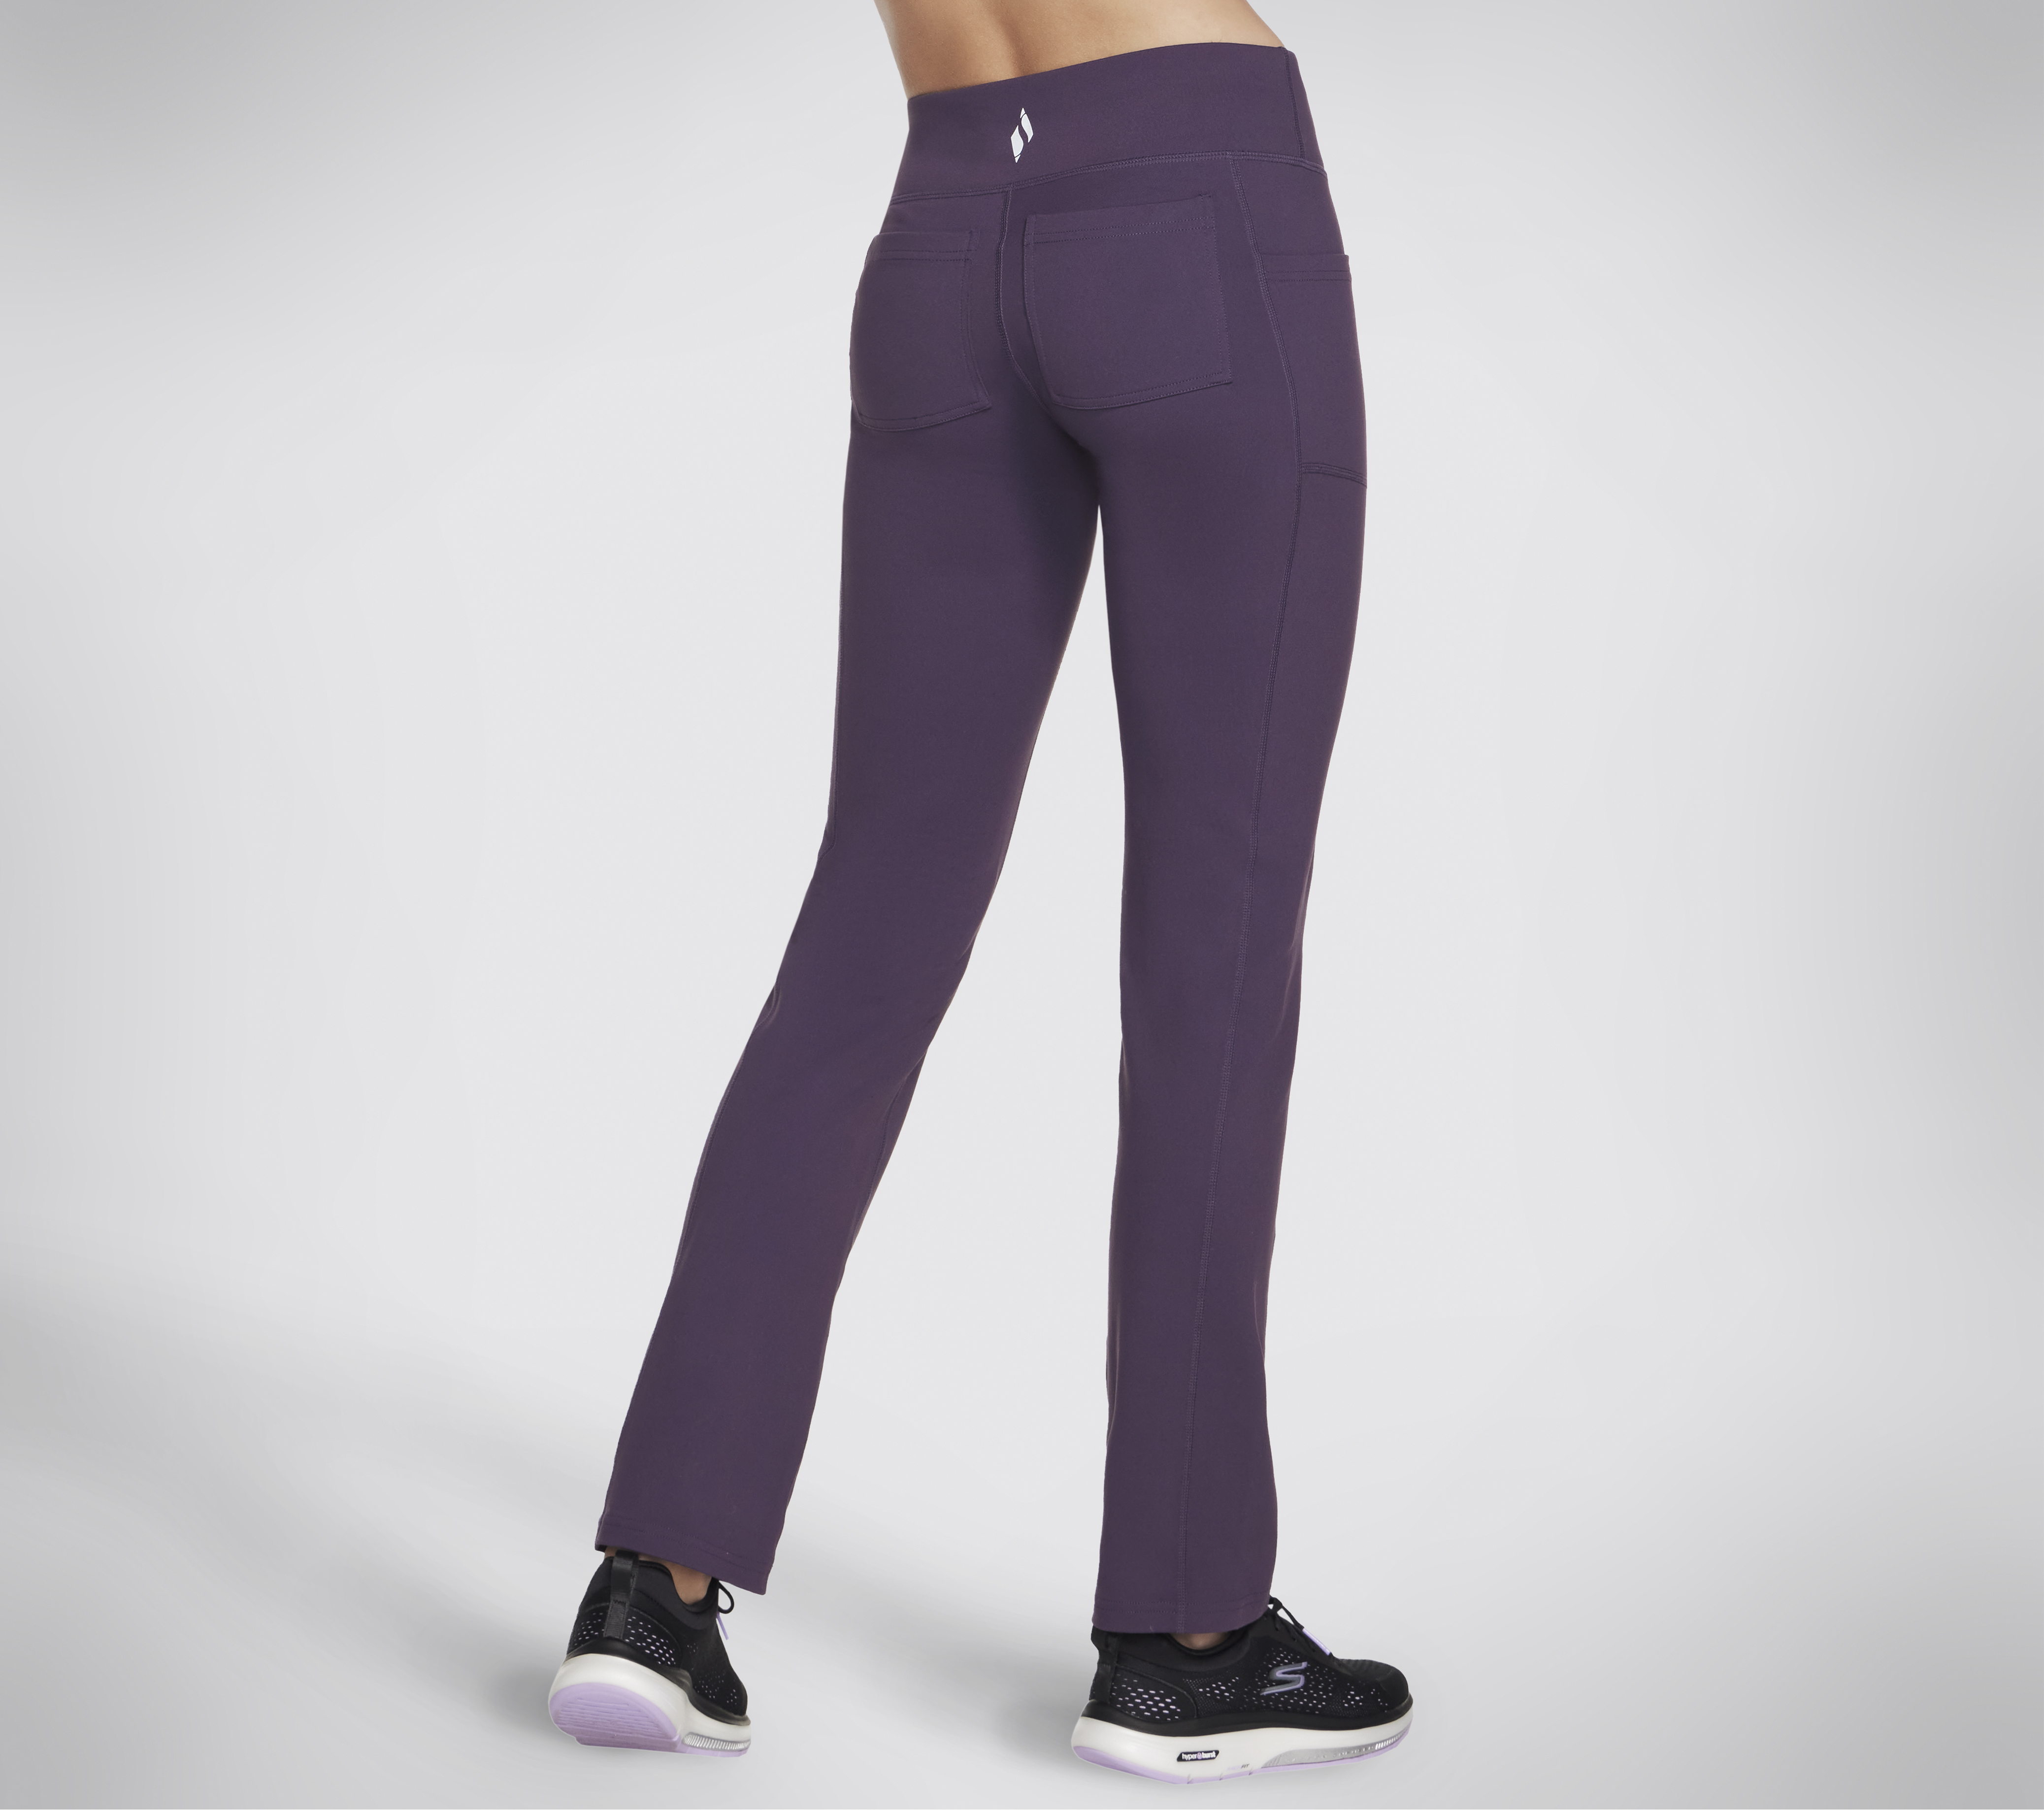 Skechers Women's Purple High Waisted GoWalk Pants Size Variations